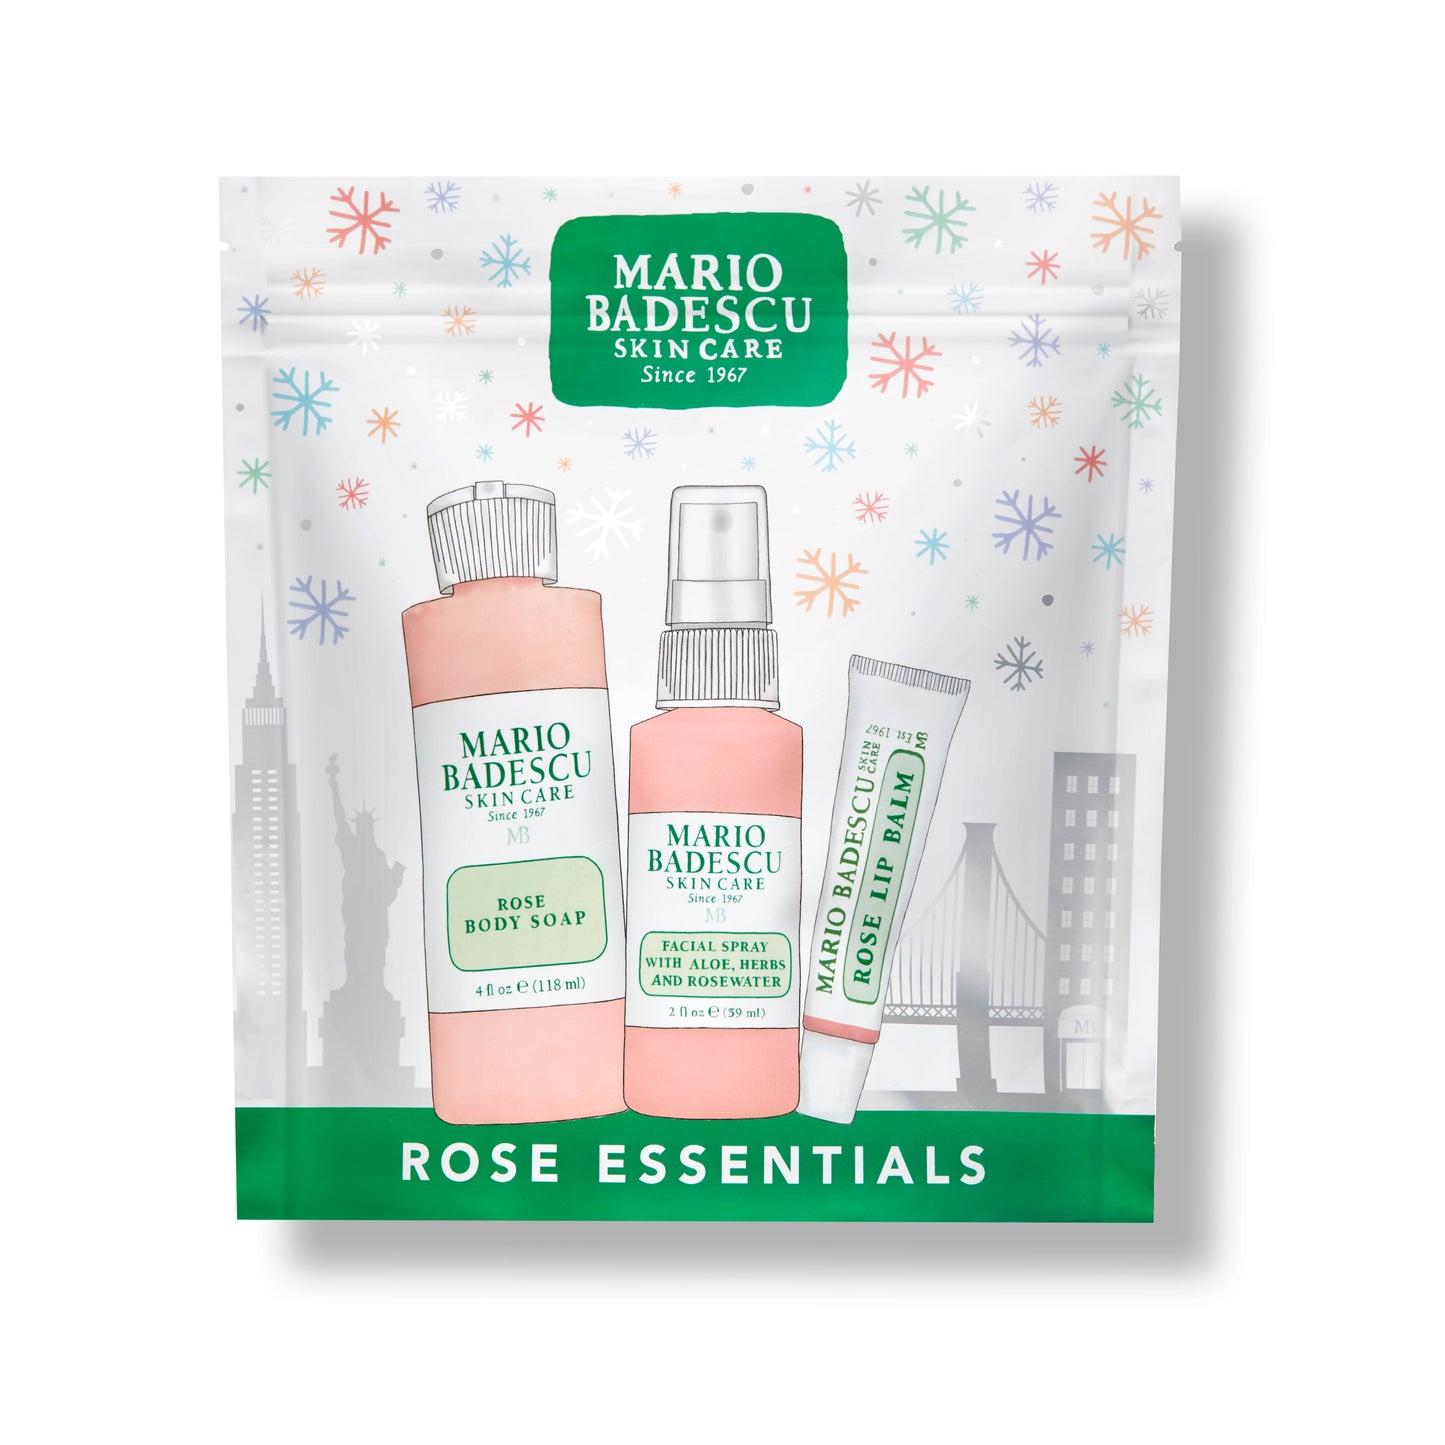 Rose Essentials Holiday Kit